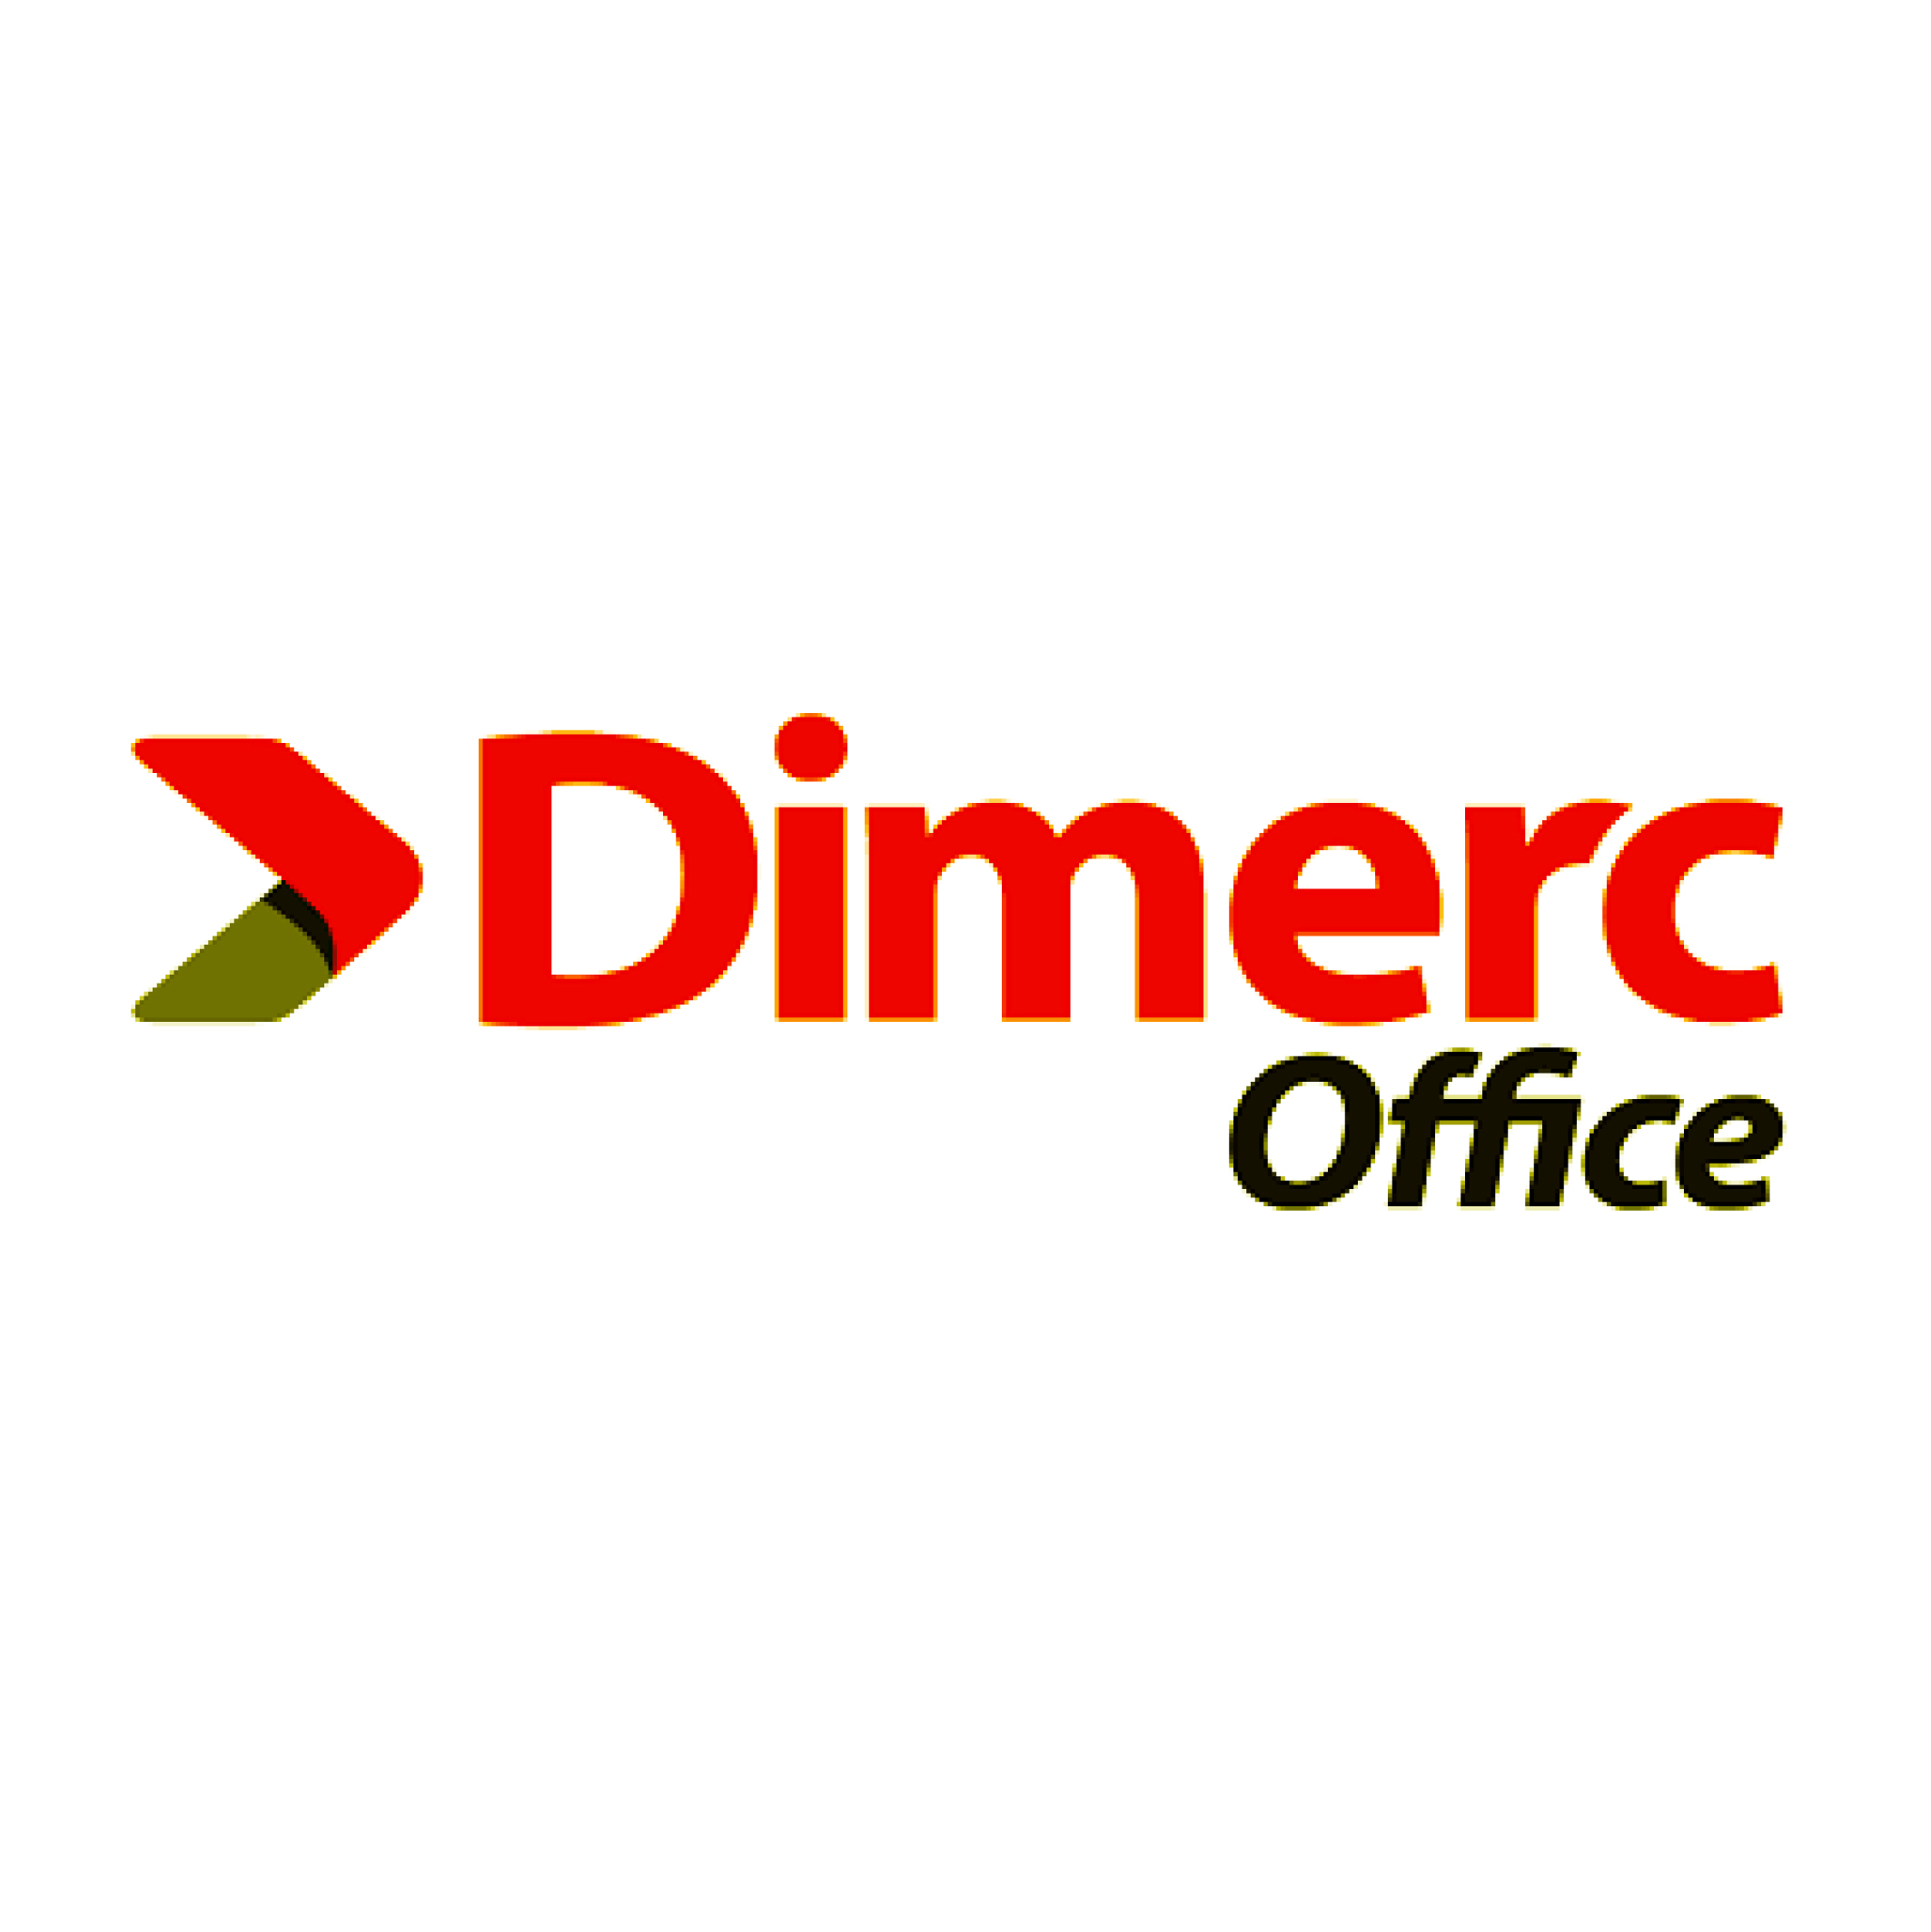 Dimerc Office